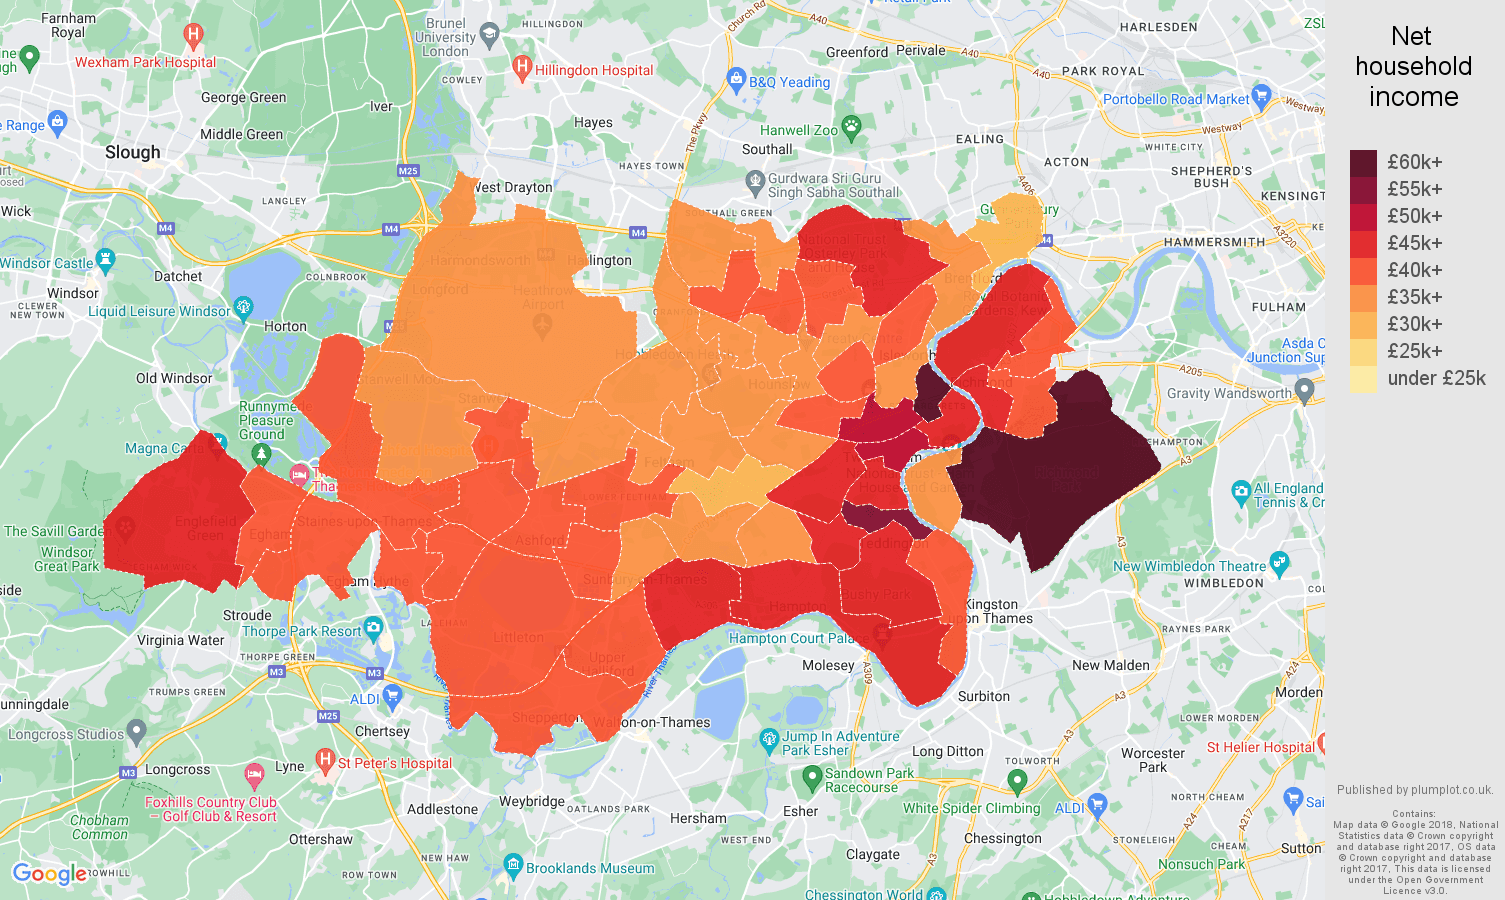 Twickenham net household income map